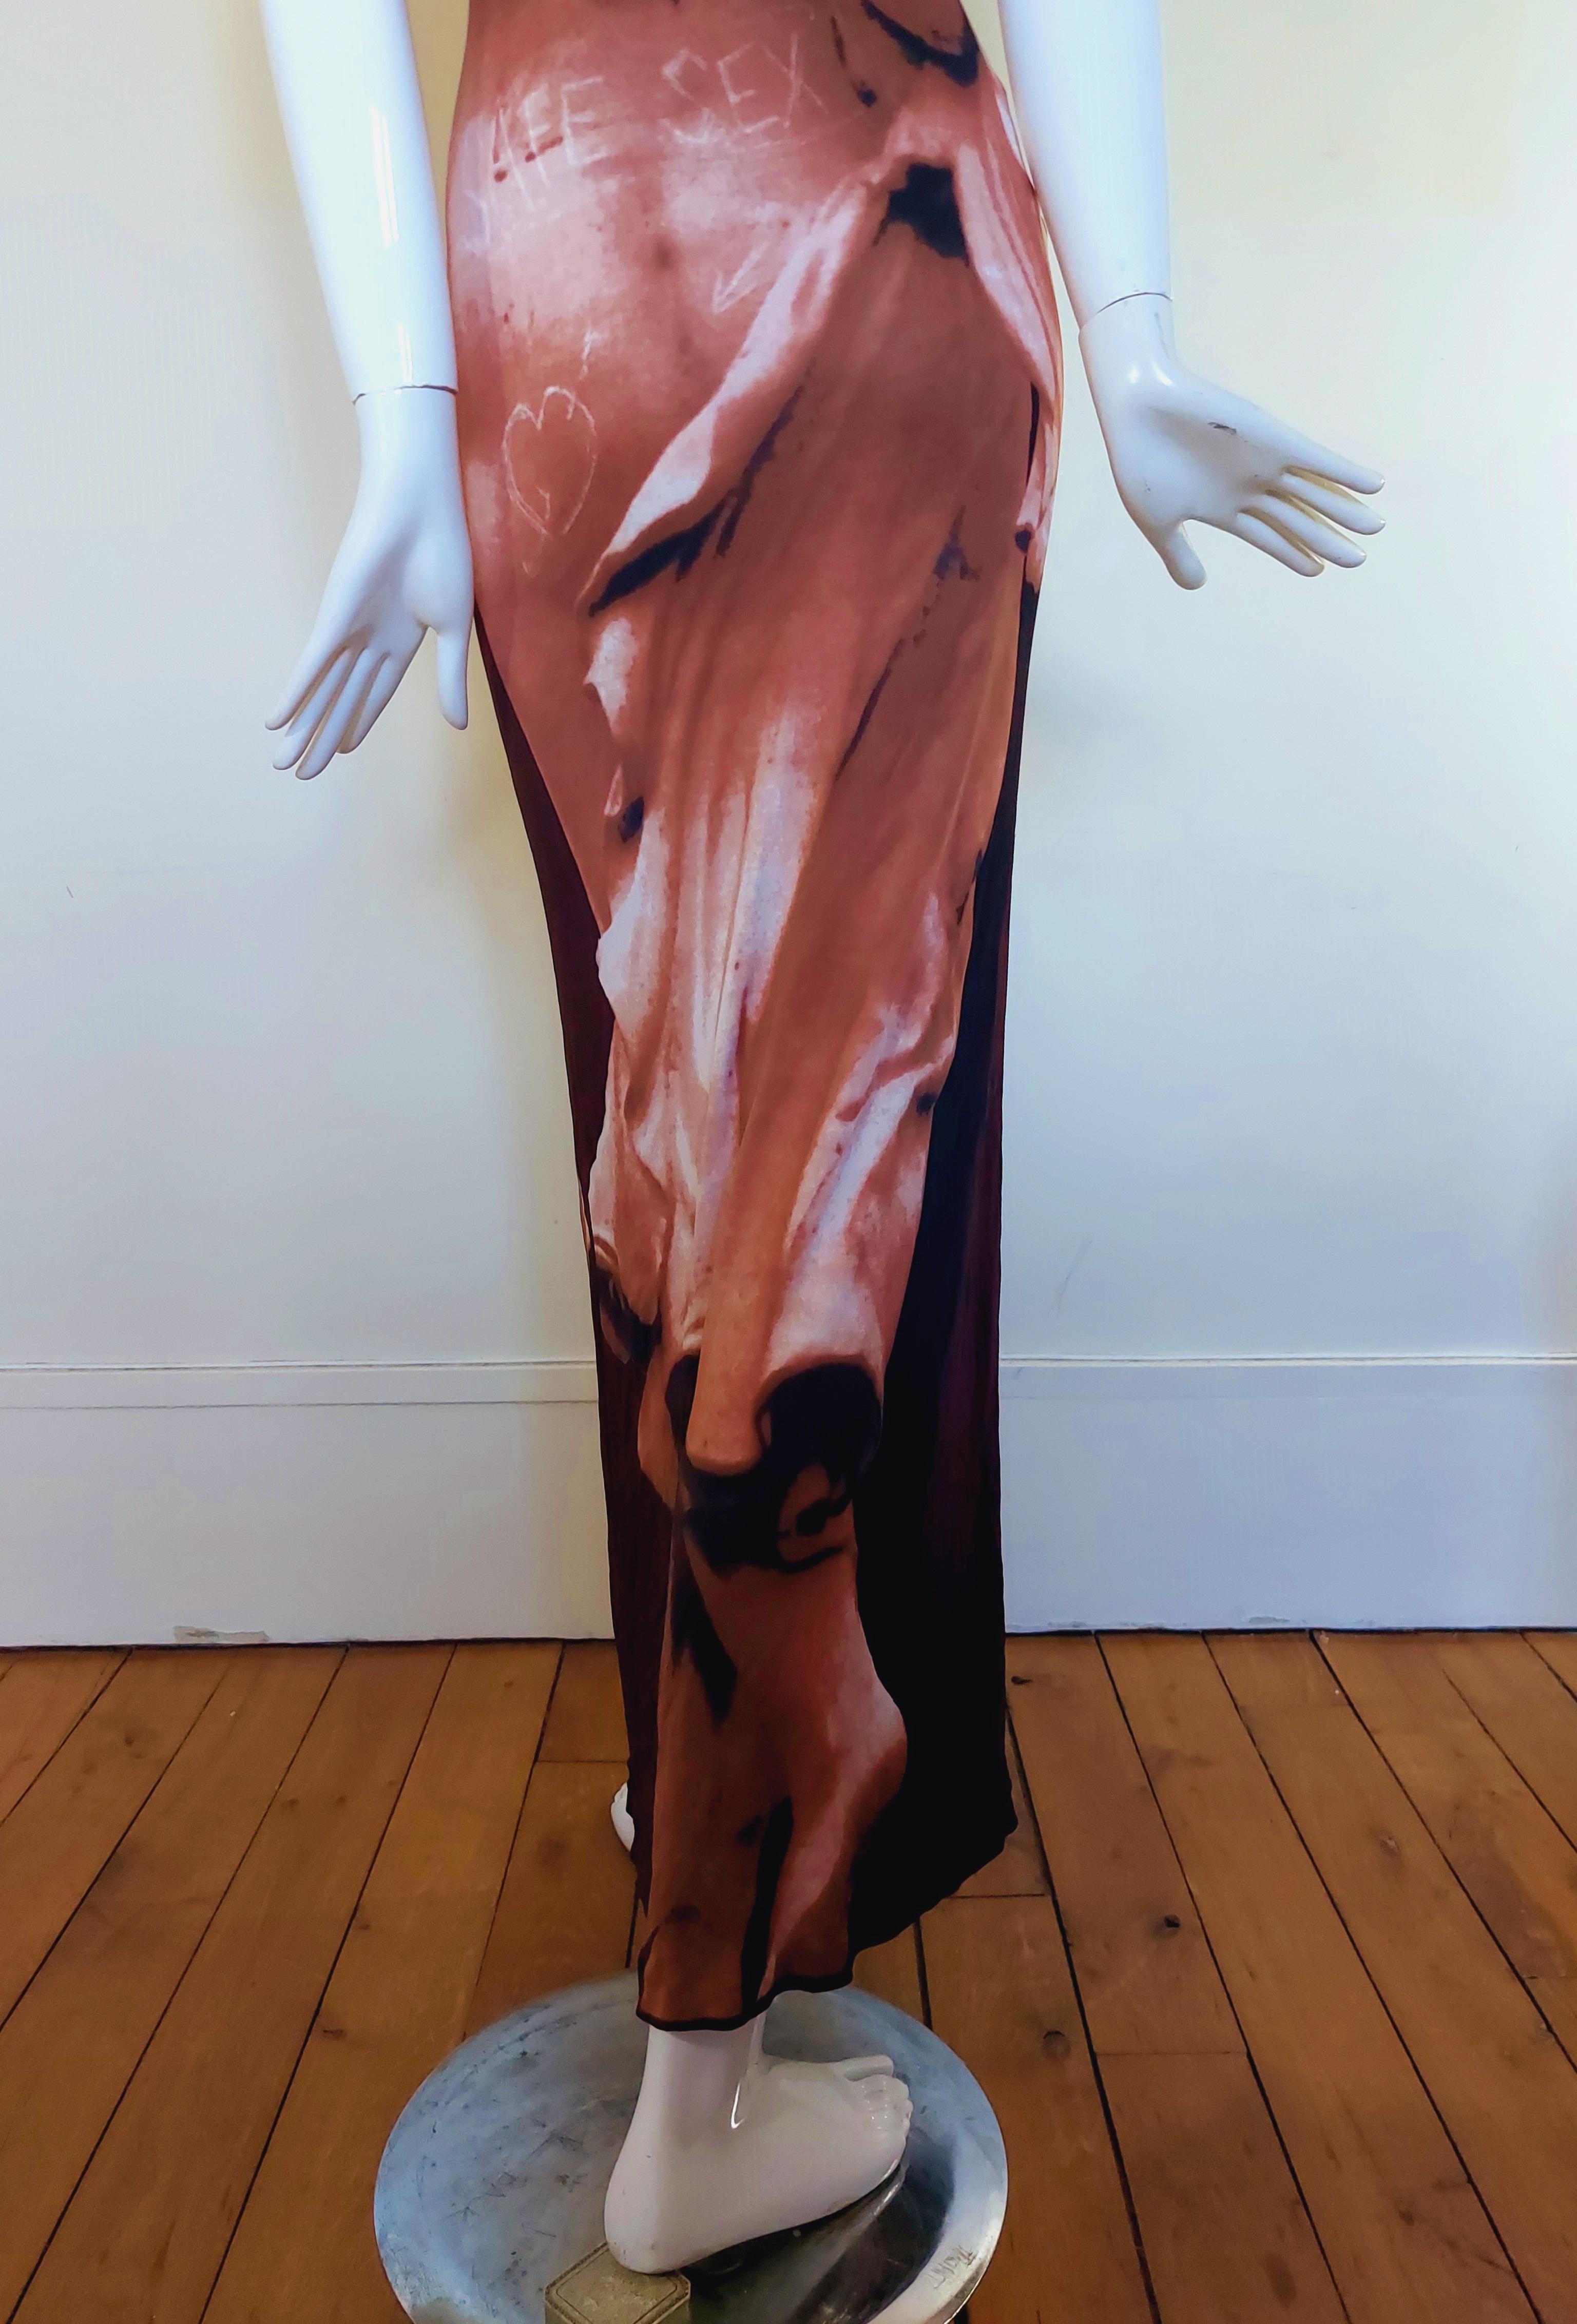 Jean Paul Gaultier S1999 Graffiti Goddess Venus Nude Trompe L'oeil Runway Dress For Sale 11